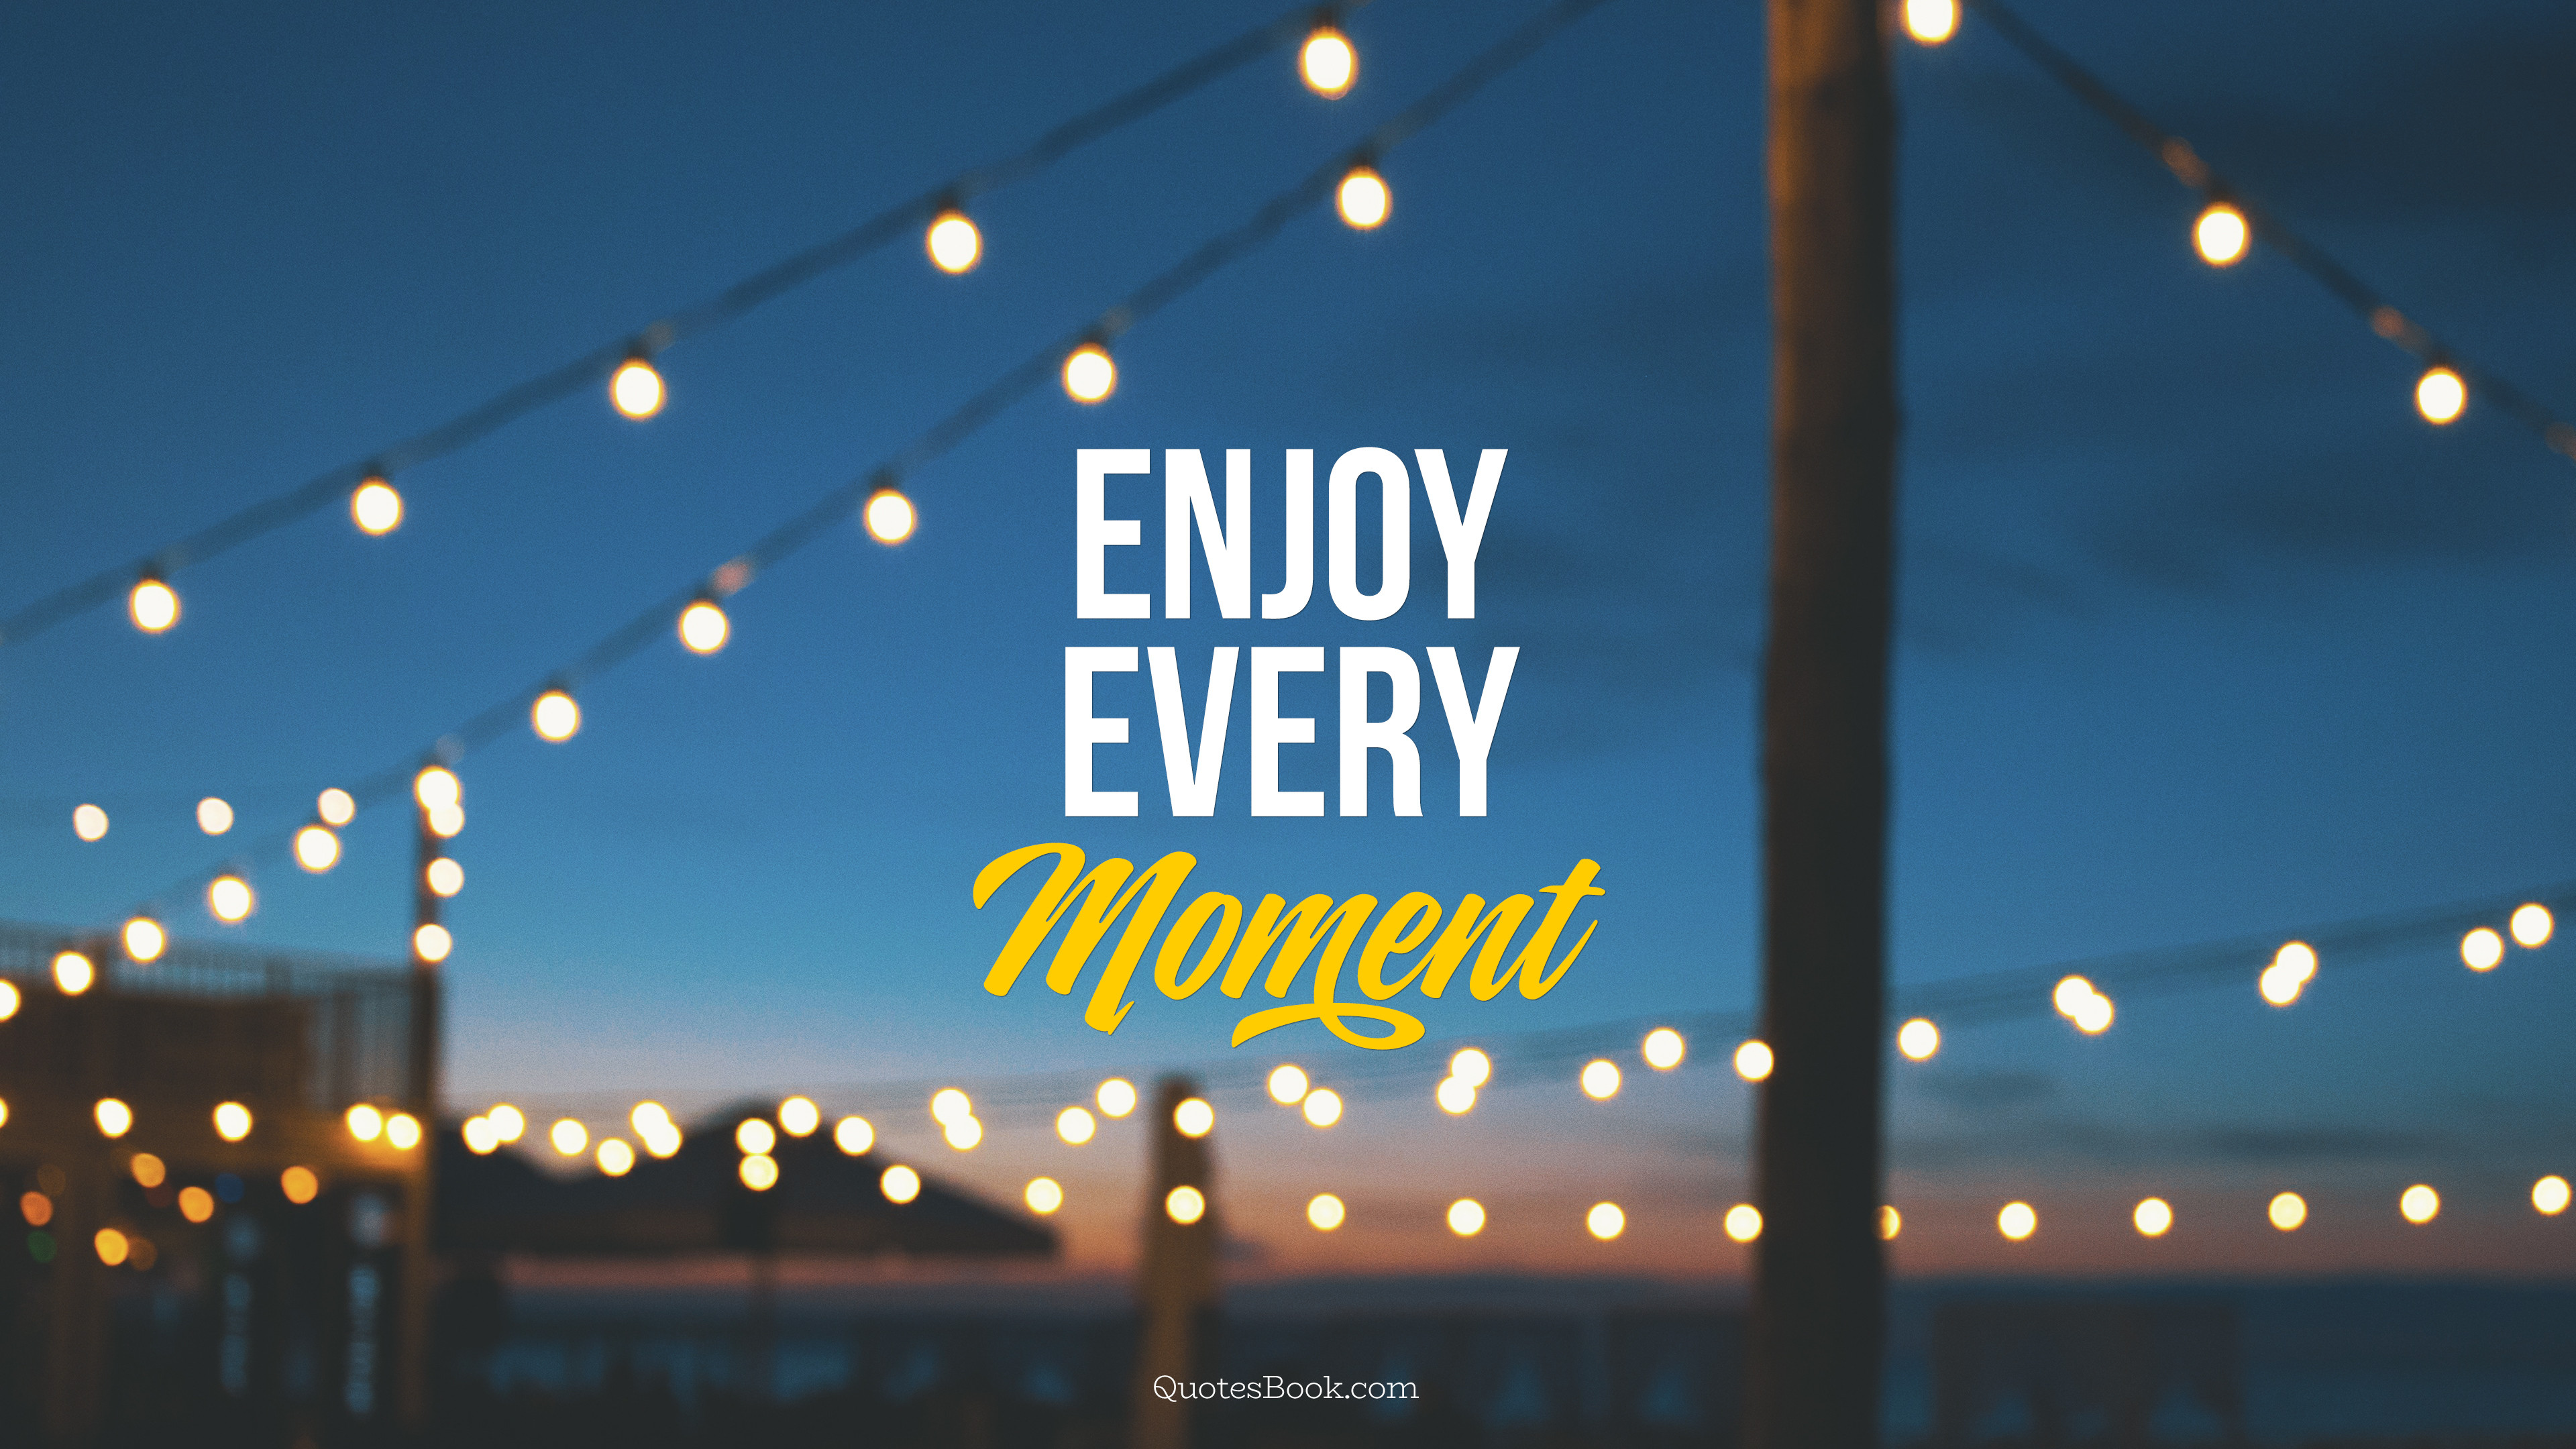 enjoy every moment 3840x2160 1445